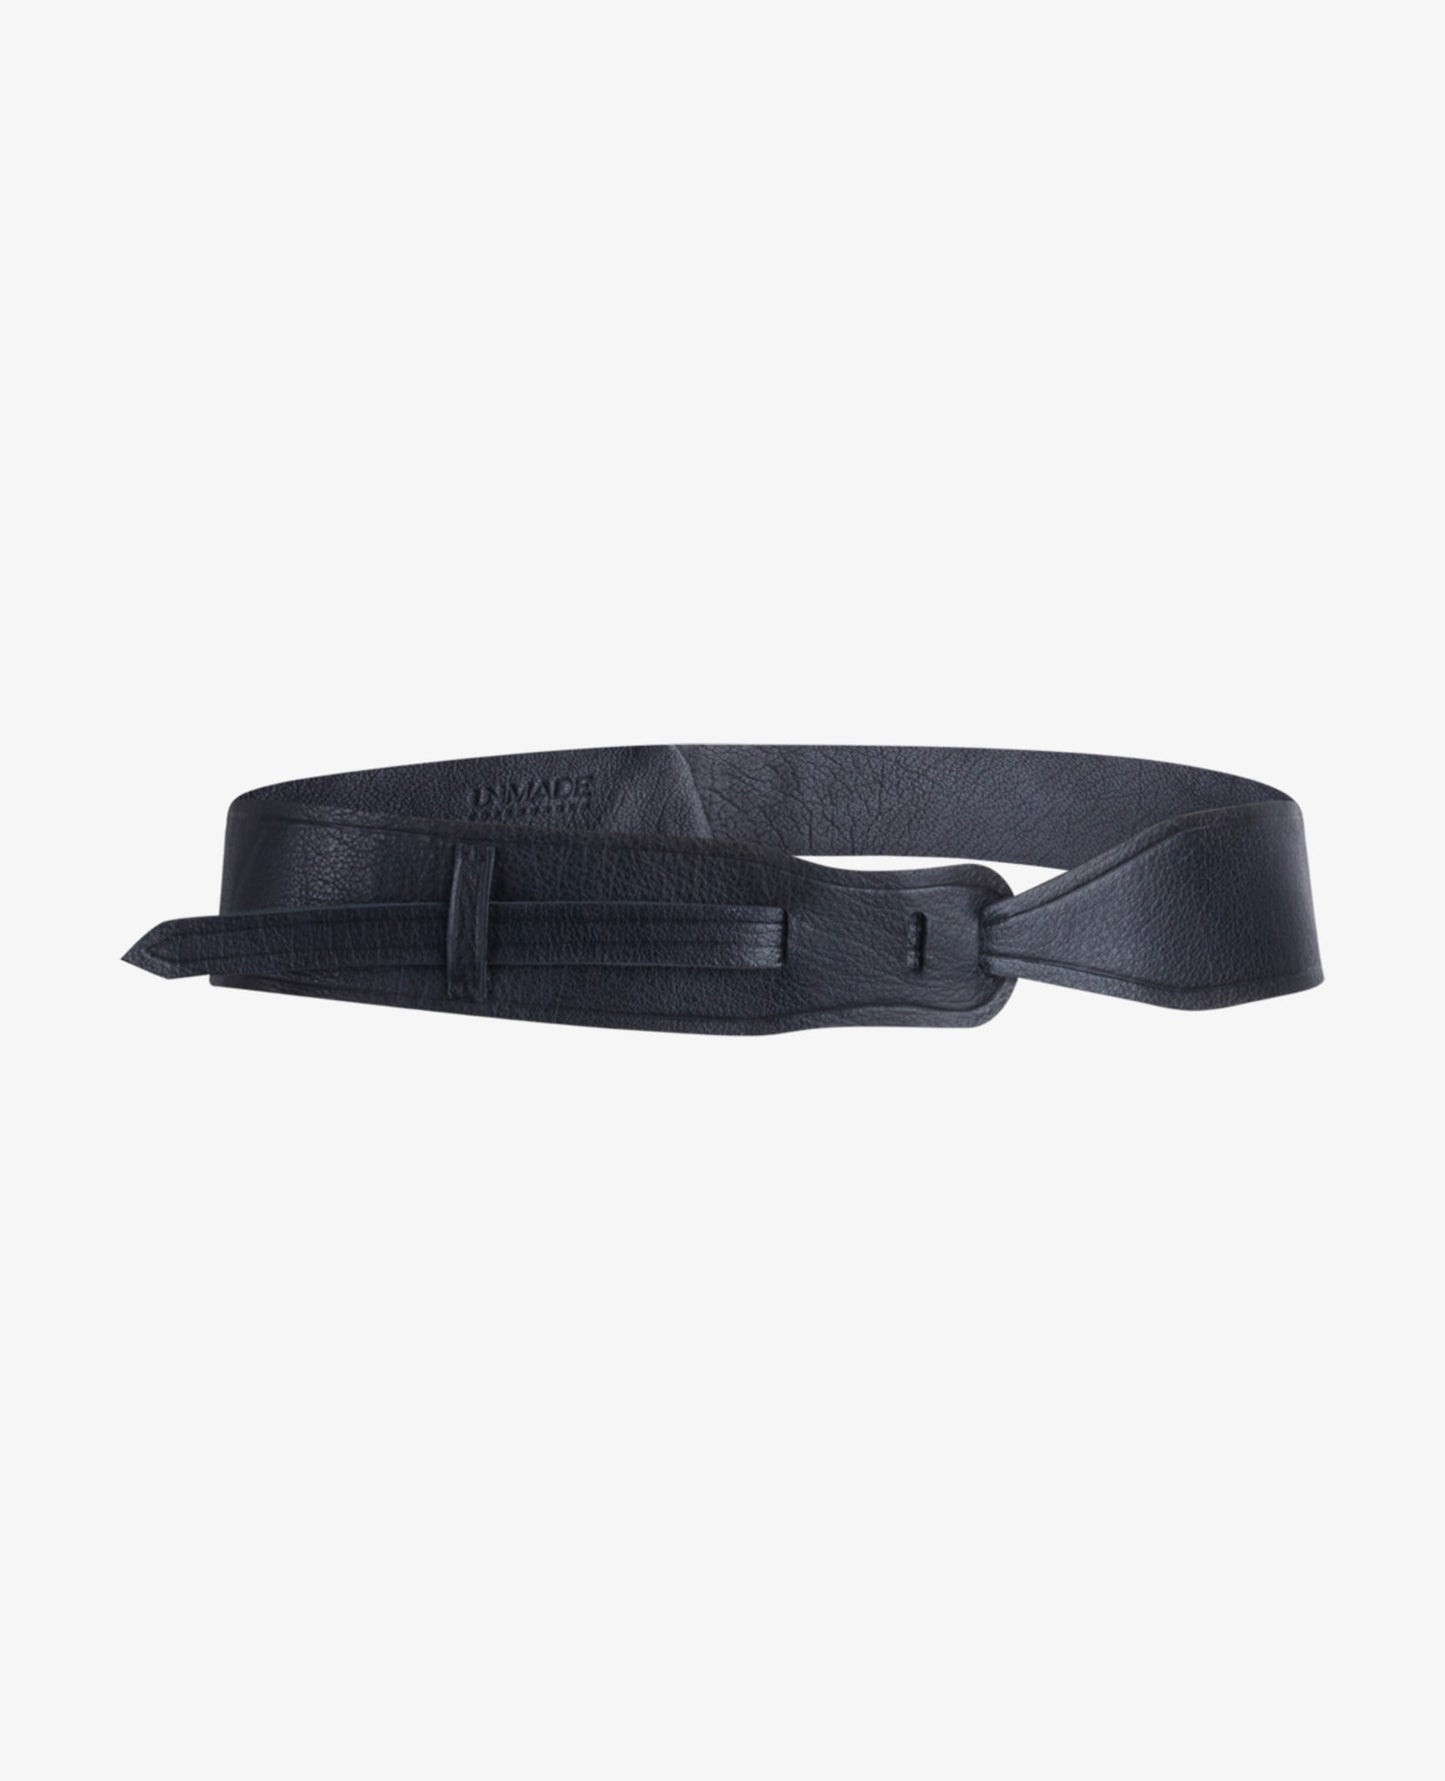 BessUM leather waist belt – Noa Noa Global